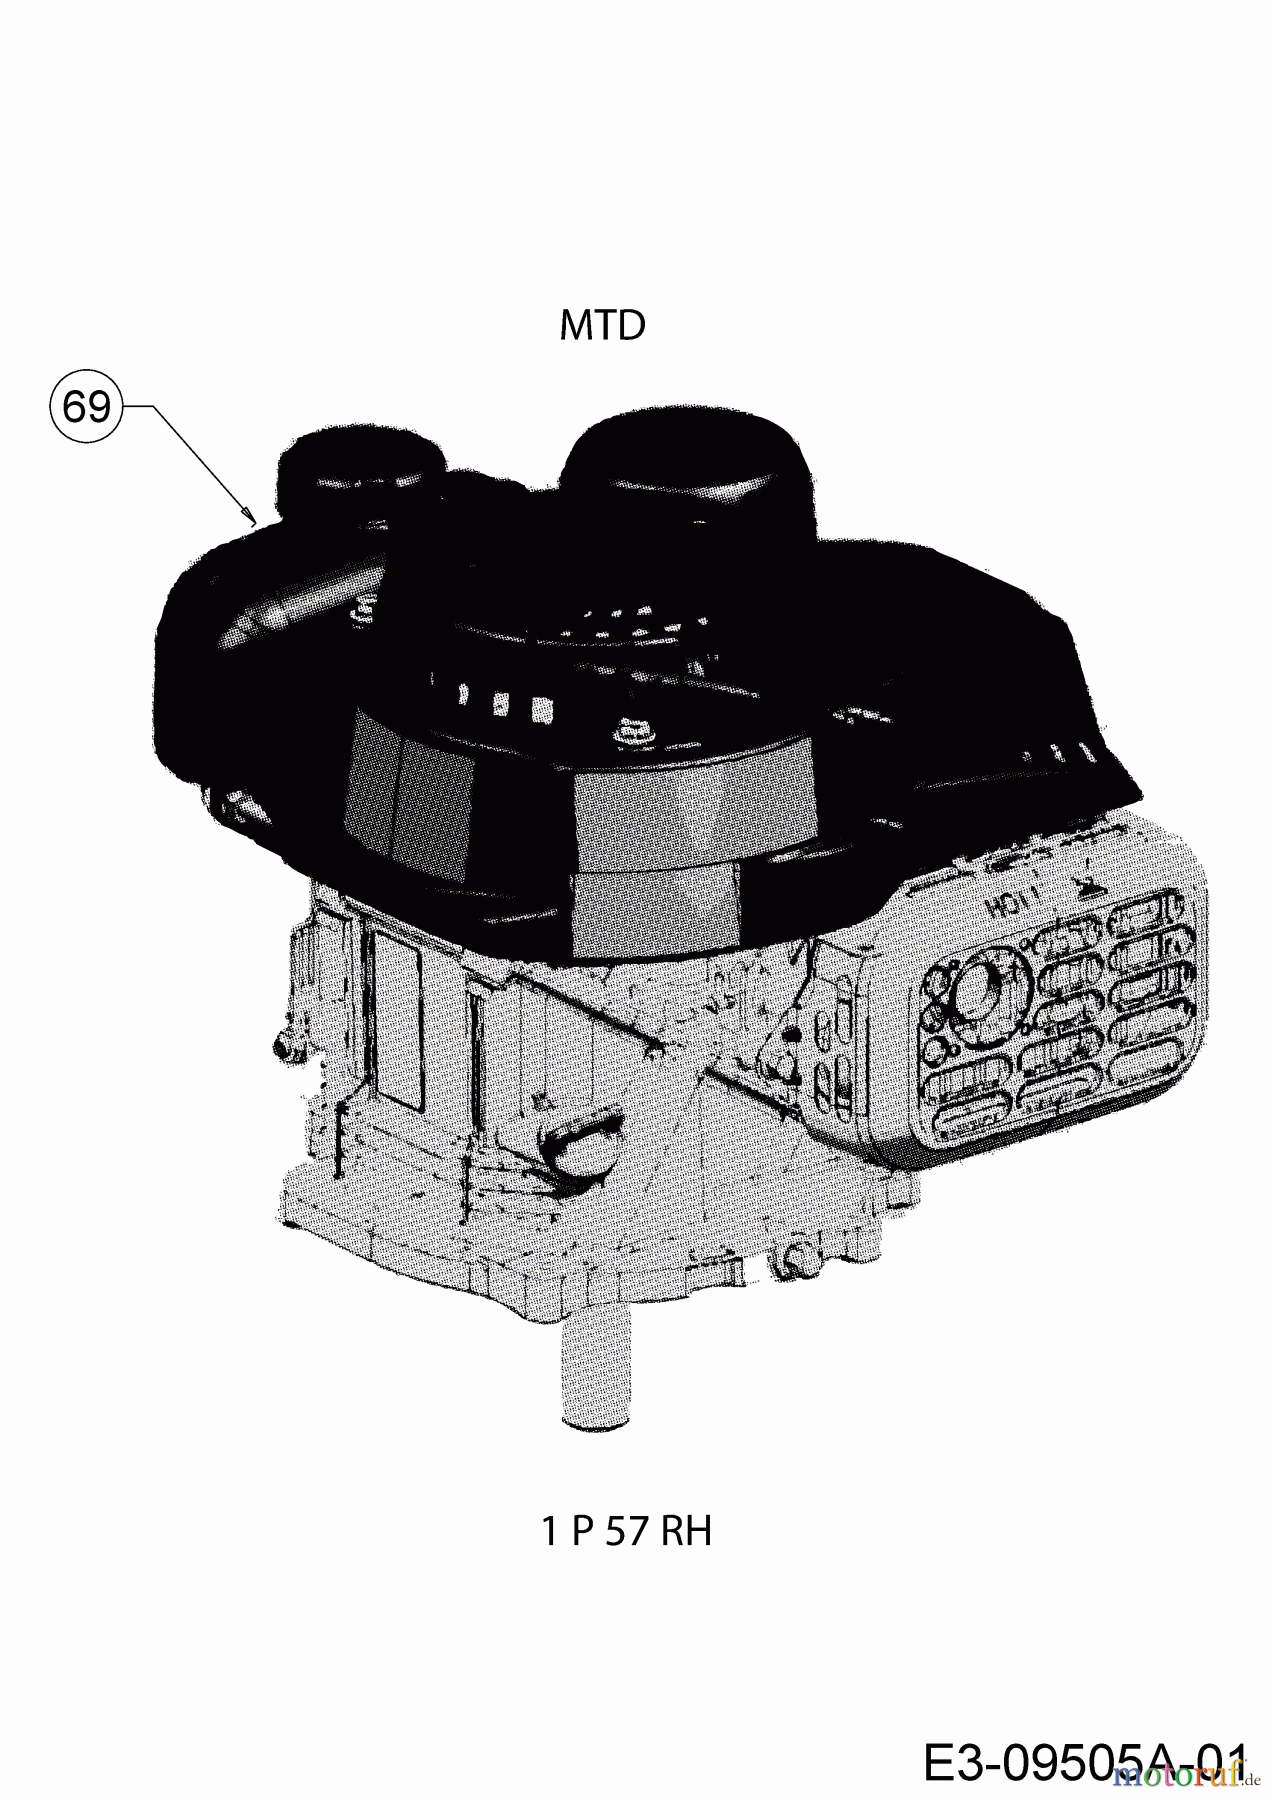  MTD Petrol mower Smart 42 PO 11C-LASJ600 (2019) Engine MTD